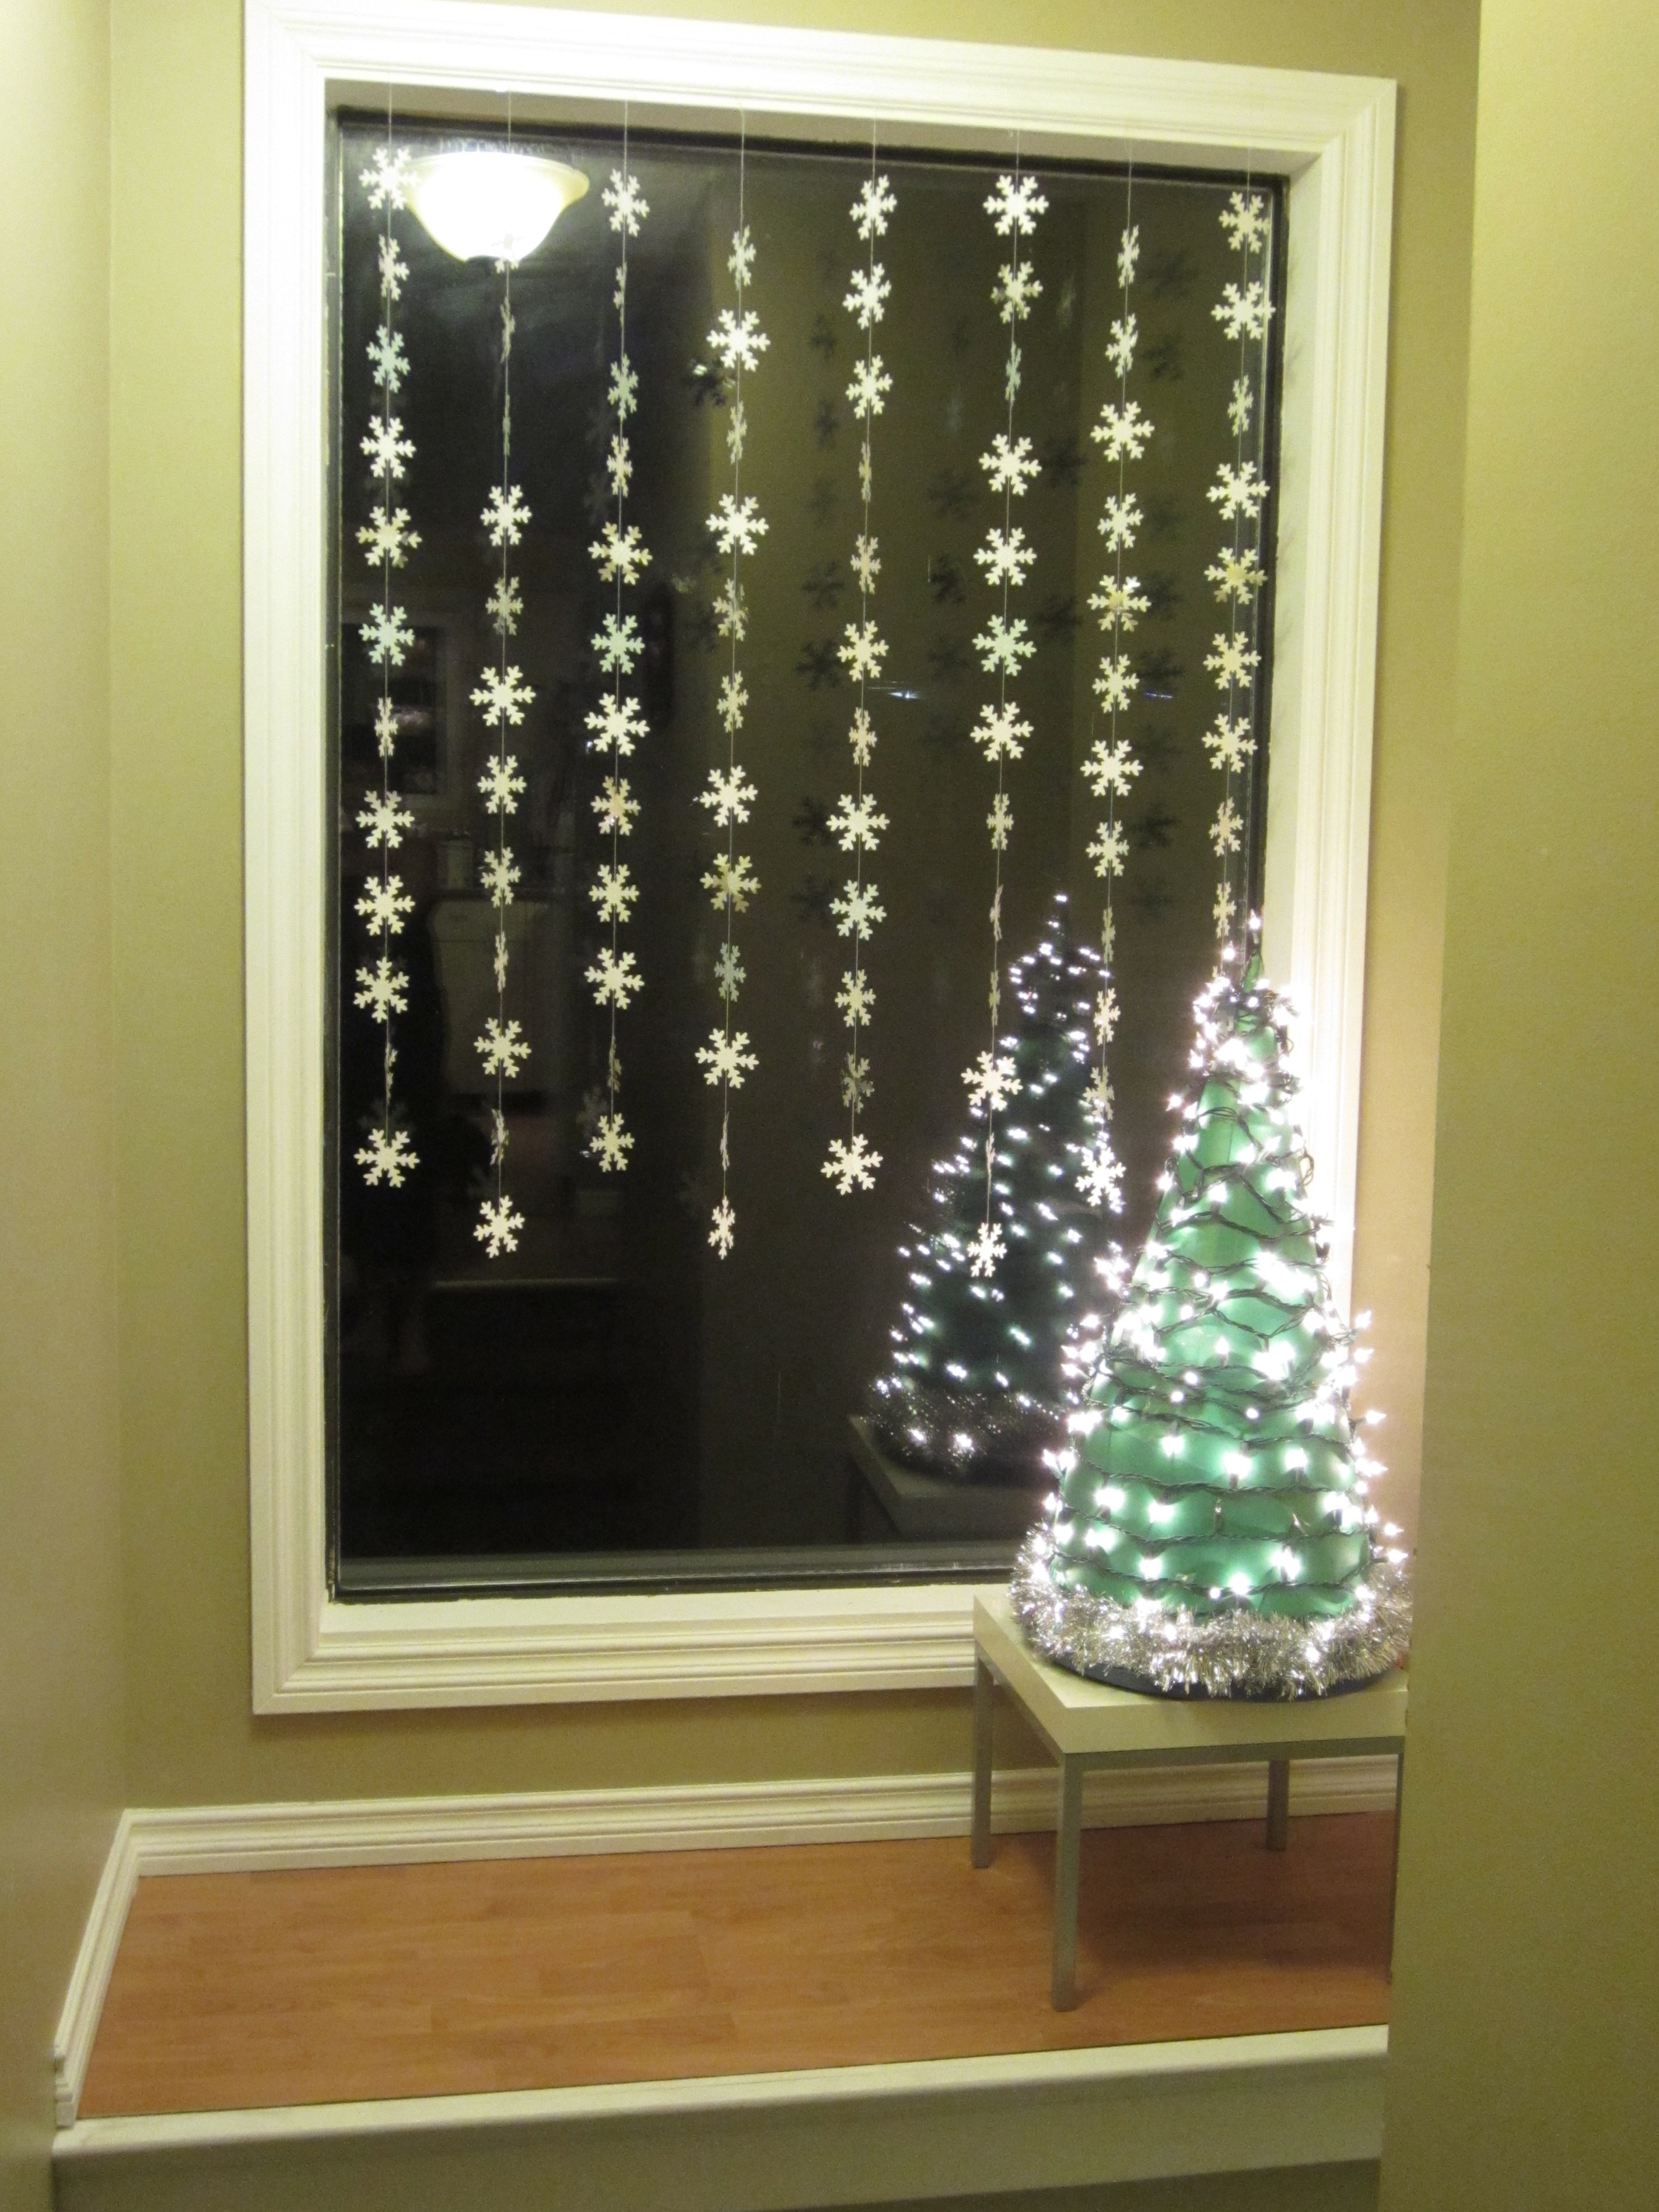 DIY Christmas Window Displays
 DIY Light Up Christmas Tree Display